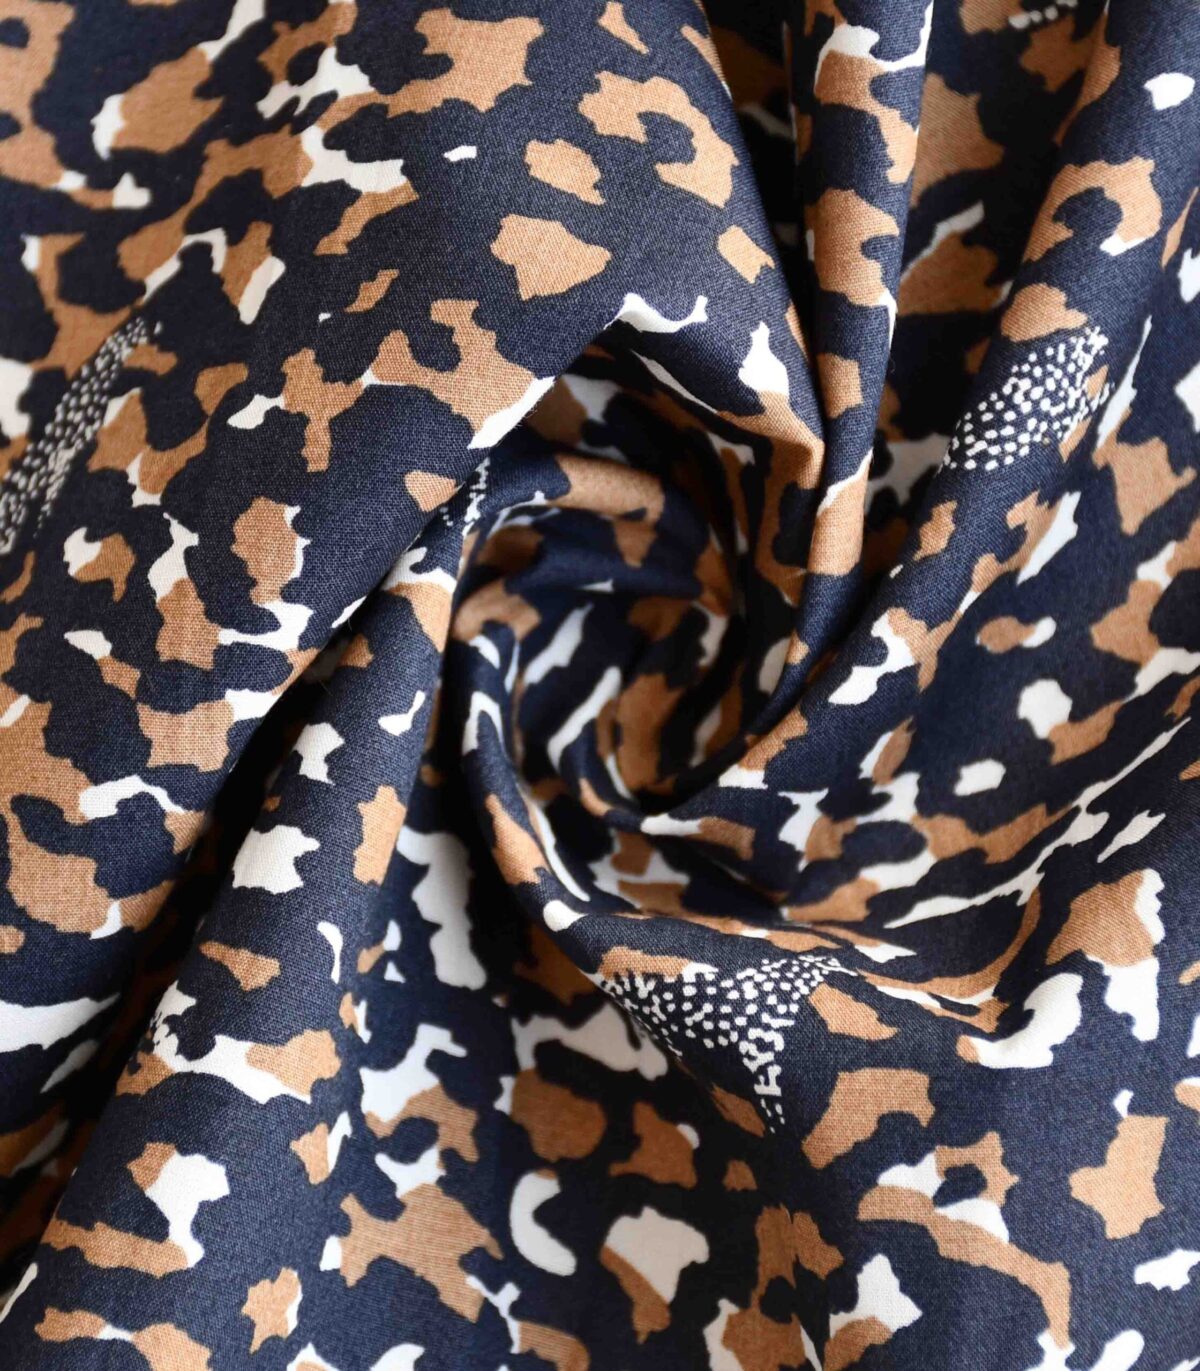 Cotton Cheetahs Animal Print Fabric